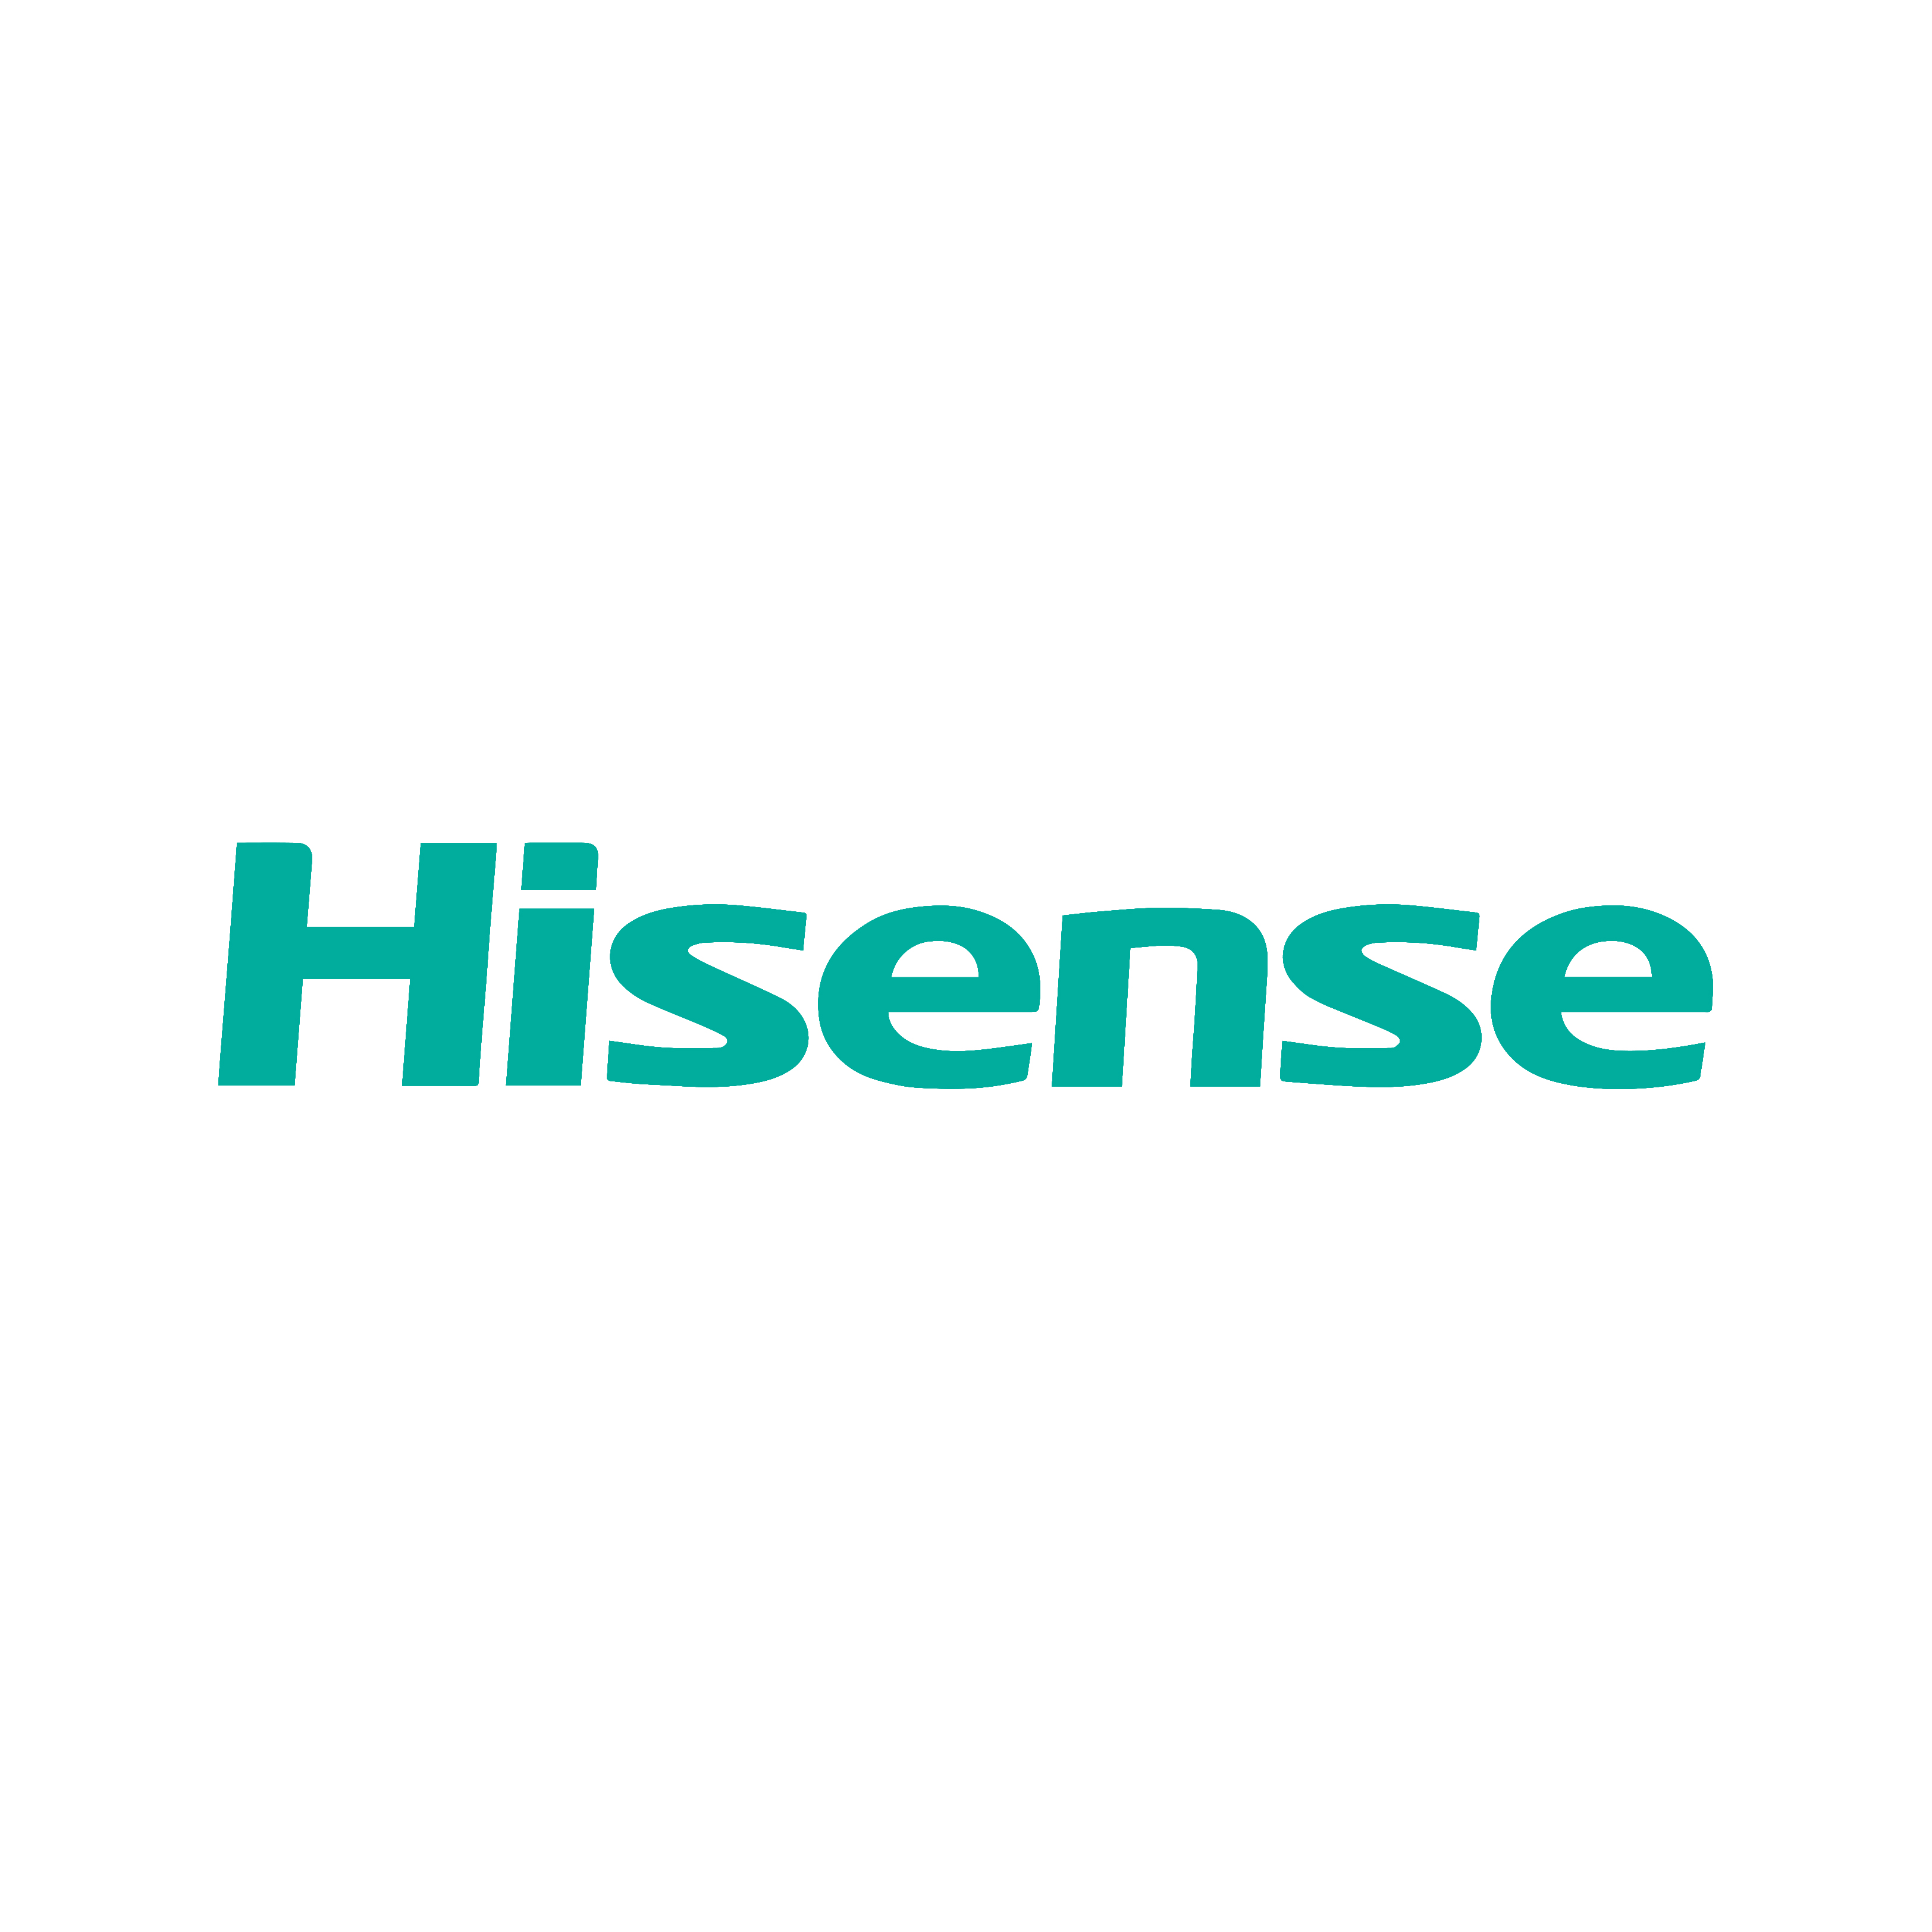 Hisense header